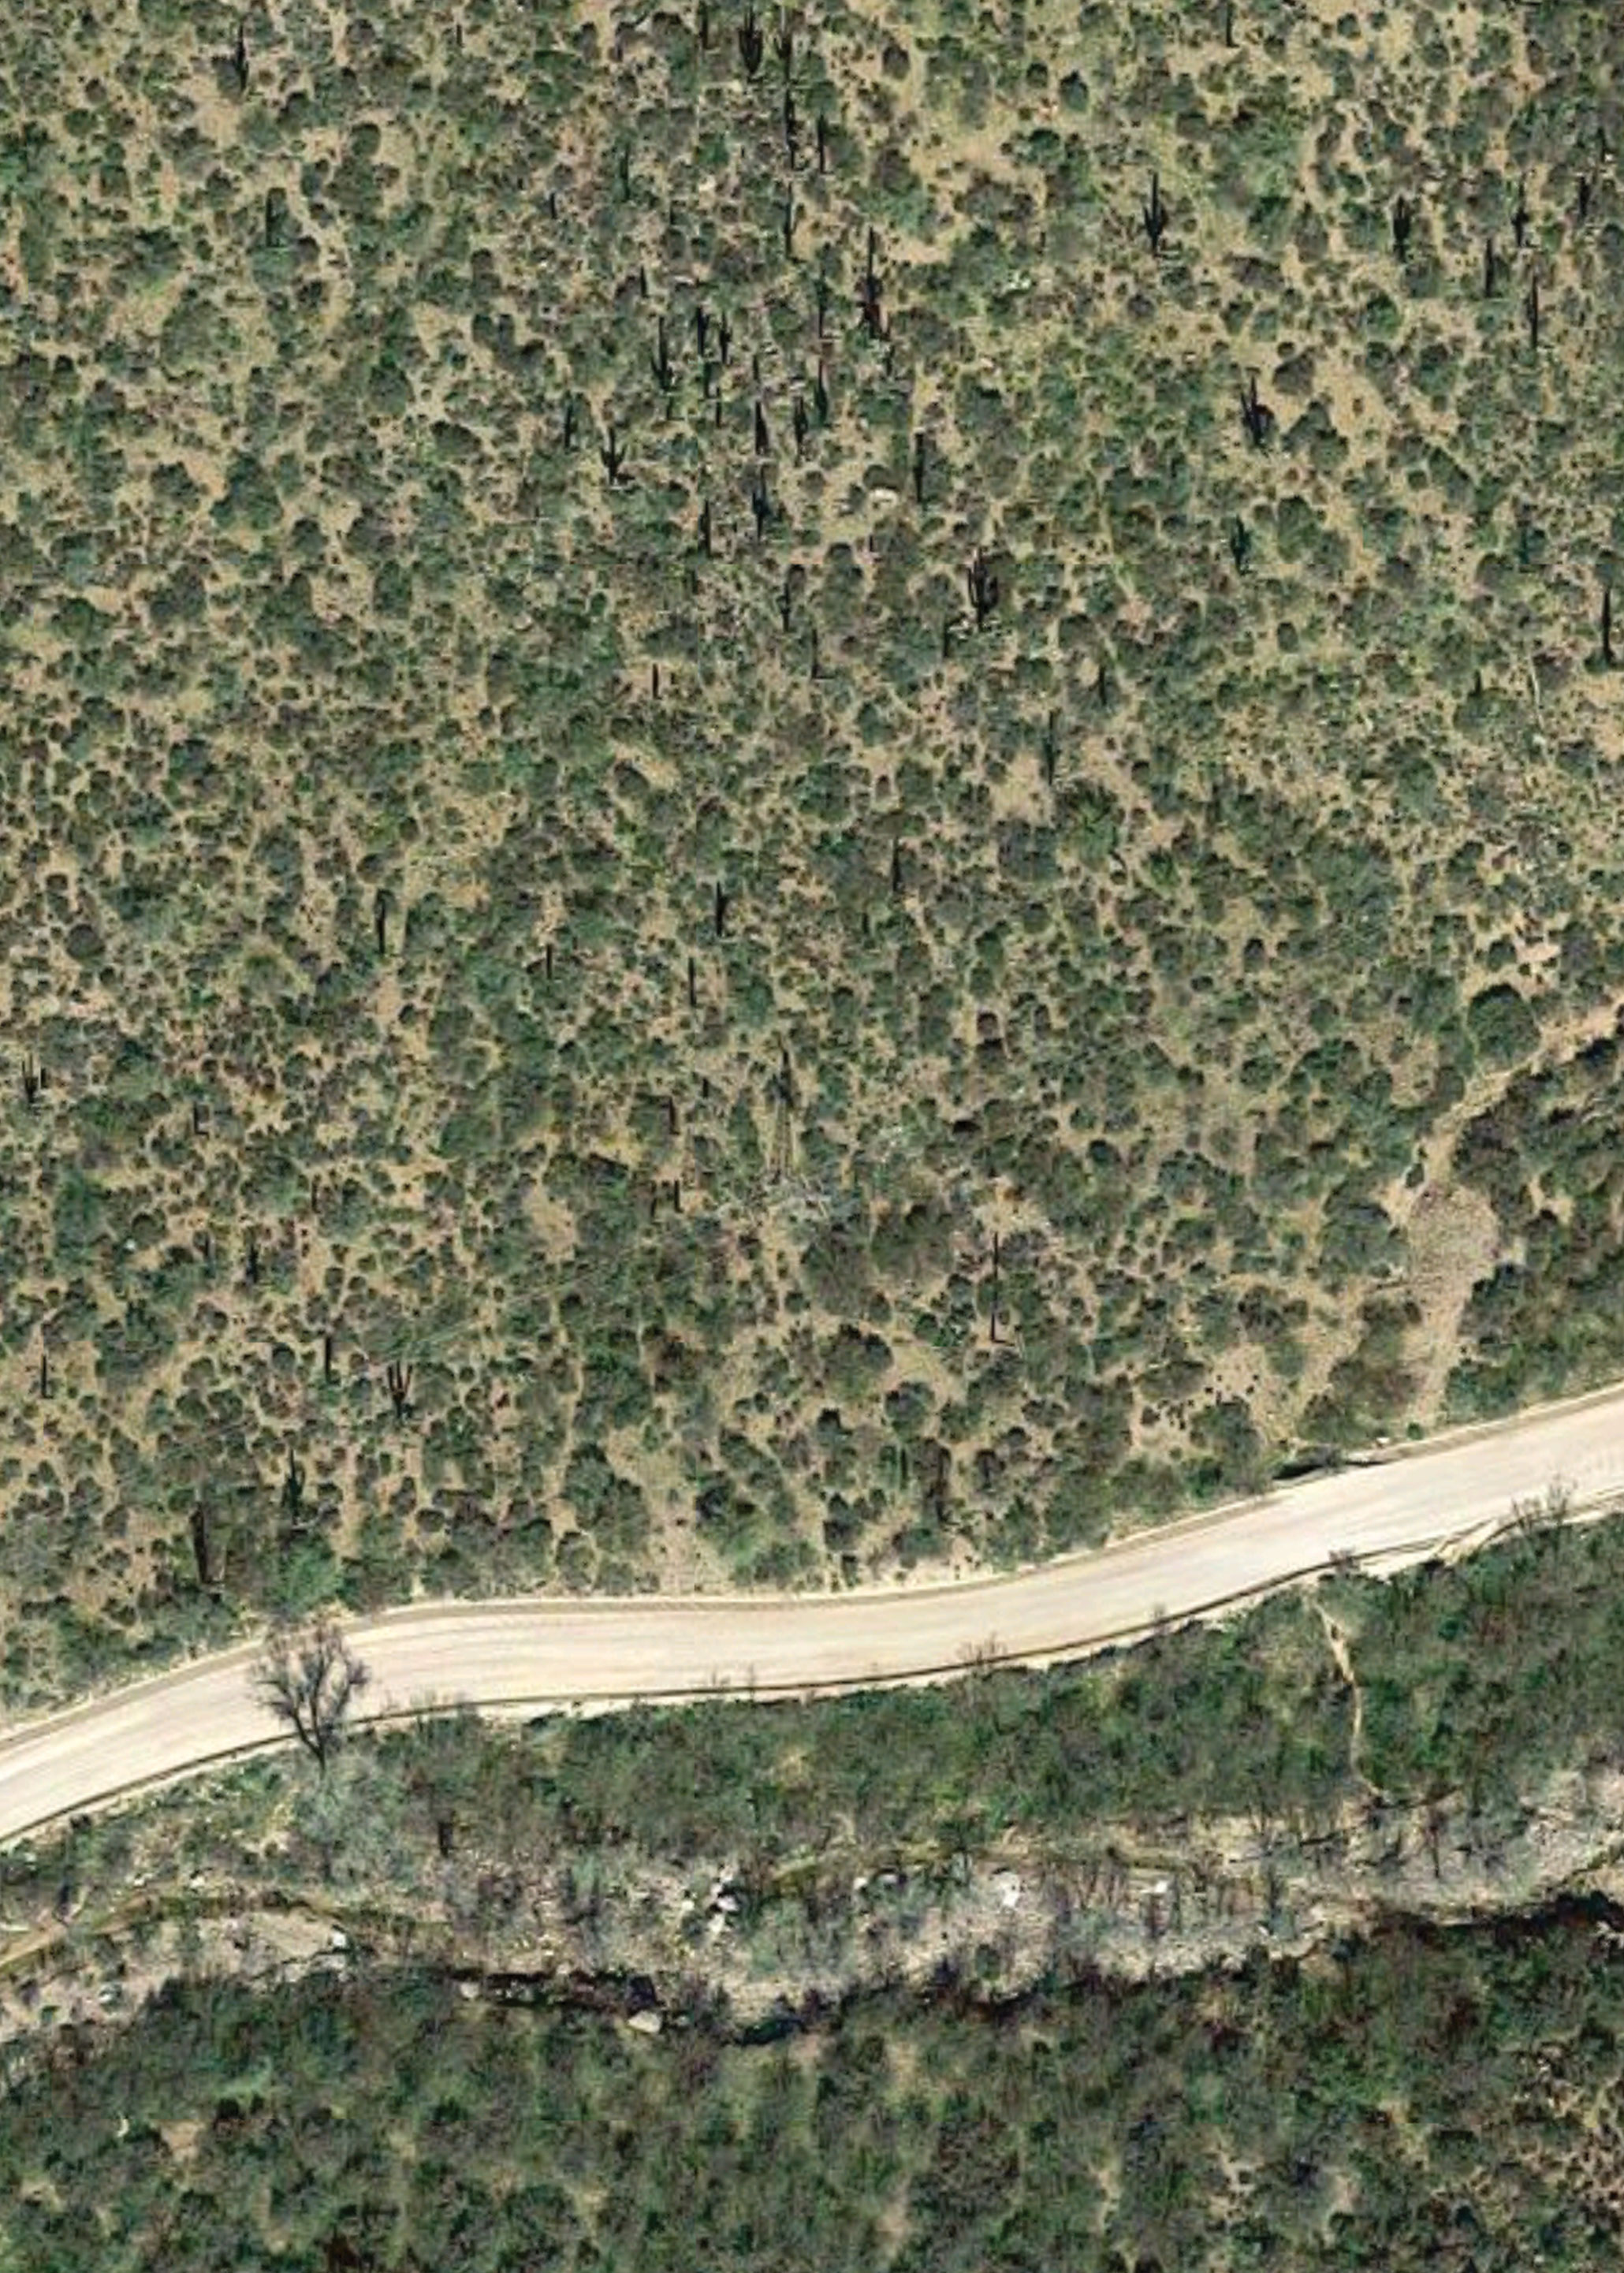 Satellite view of saguaros along Arizona State Route 88, imagery copyright Google 2016